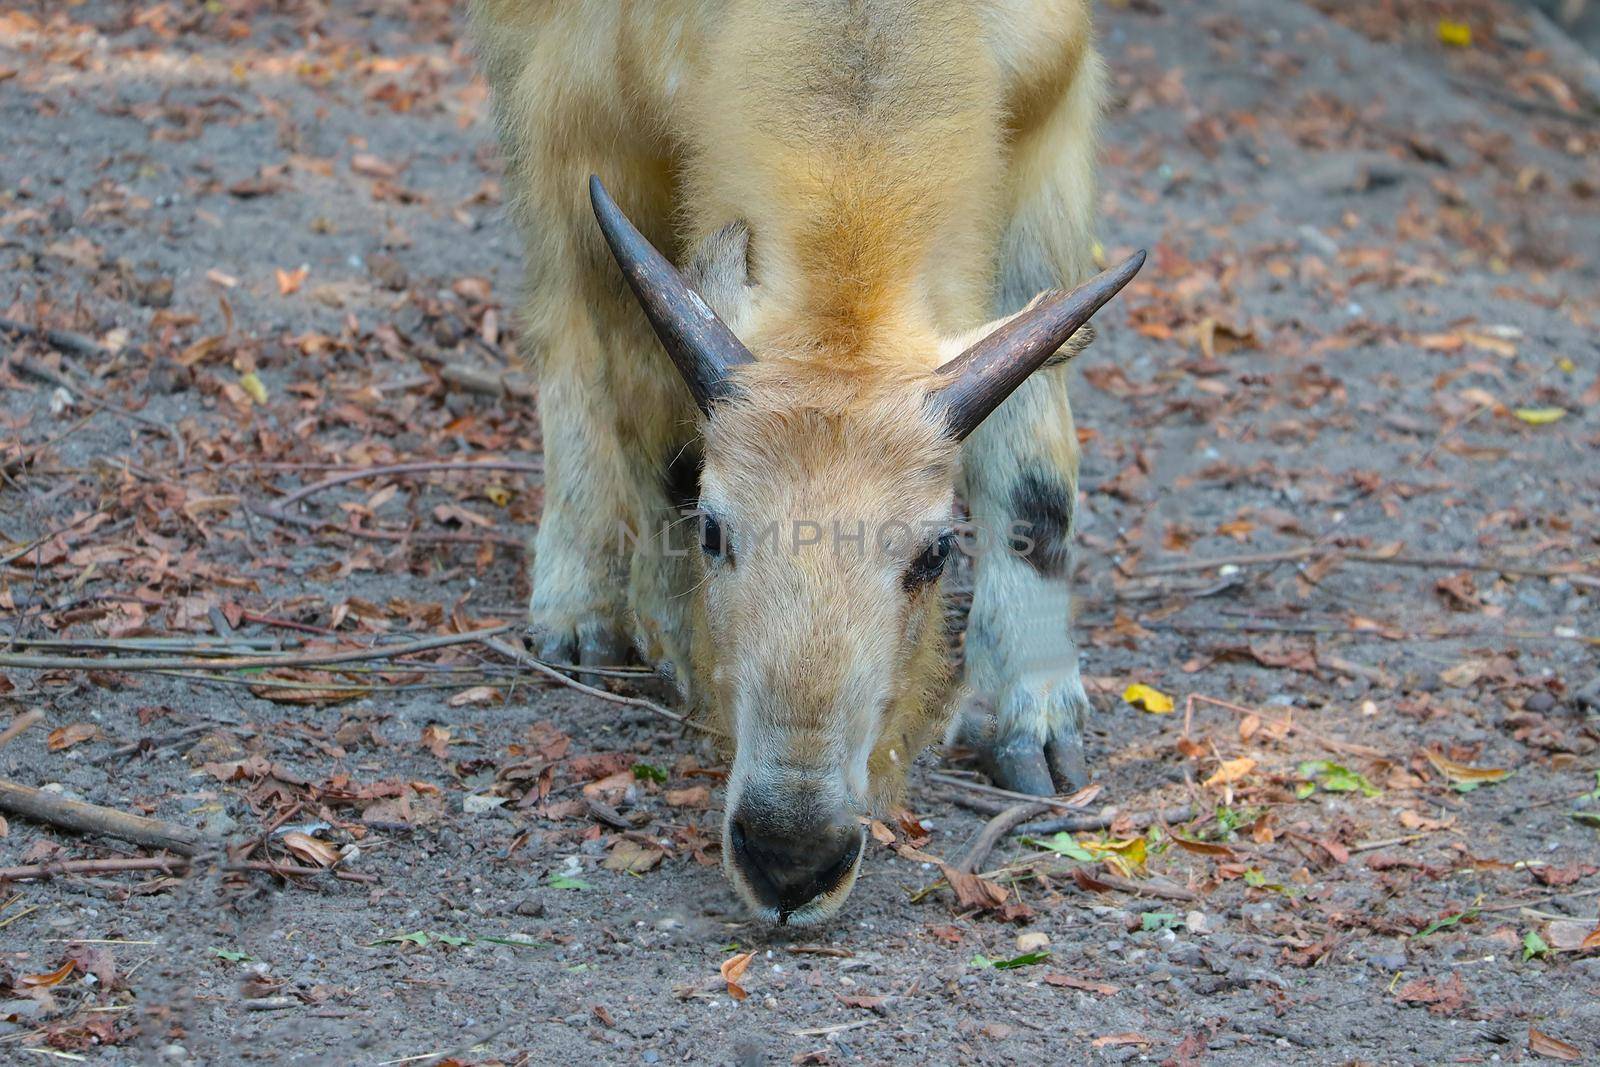 Takin is an artiodactyl mammal from the bovid family